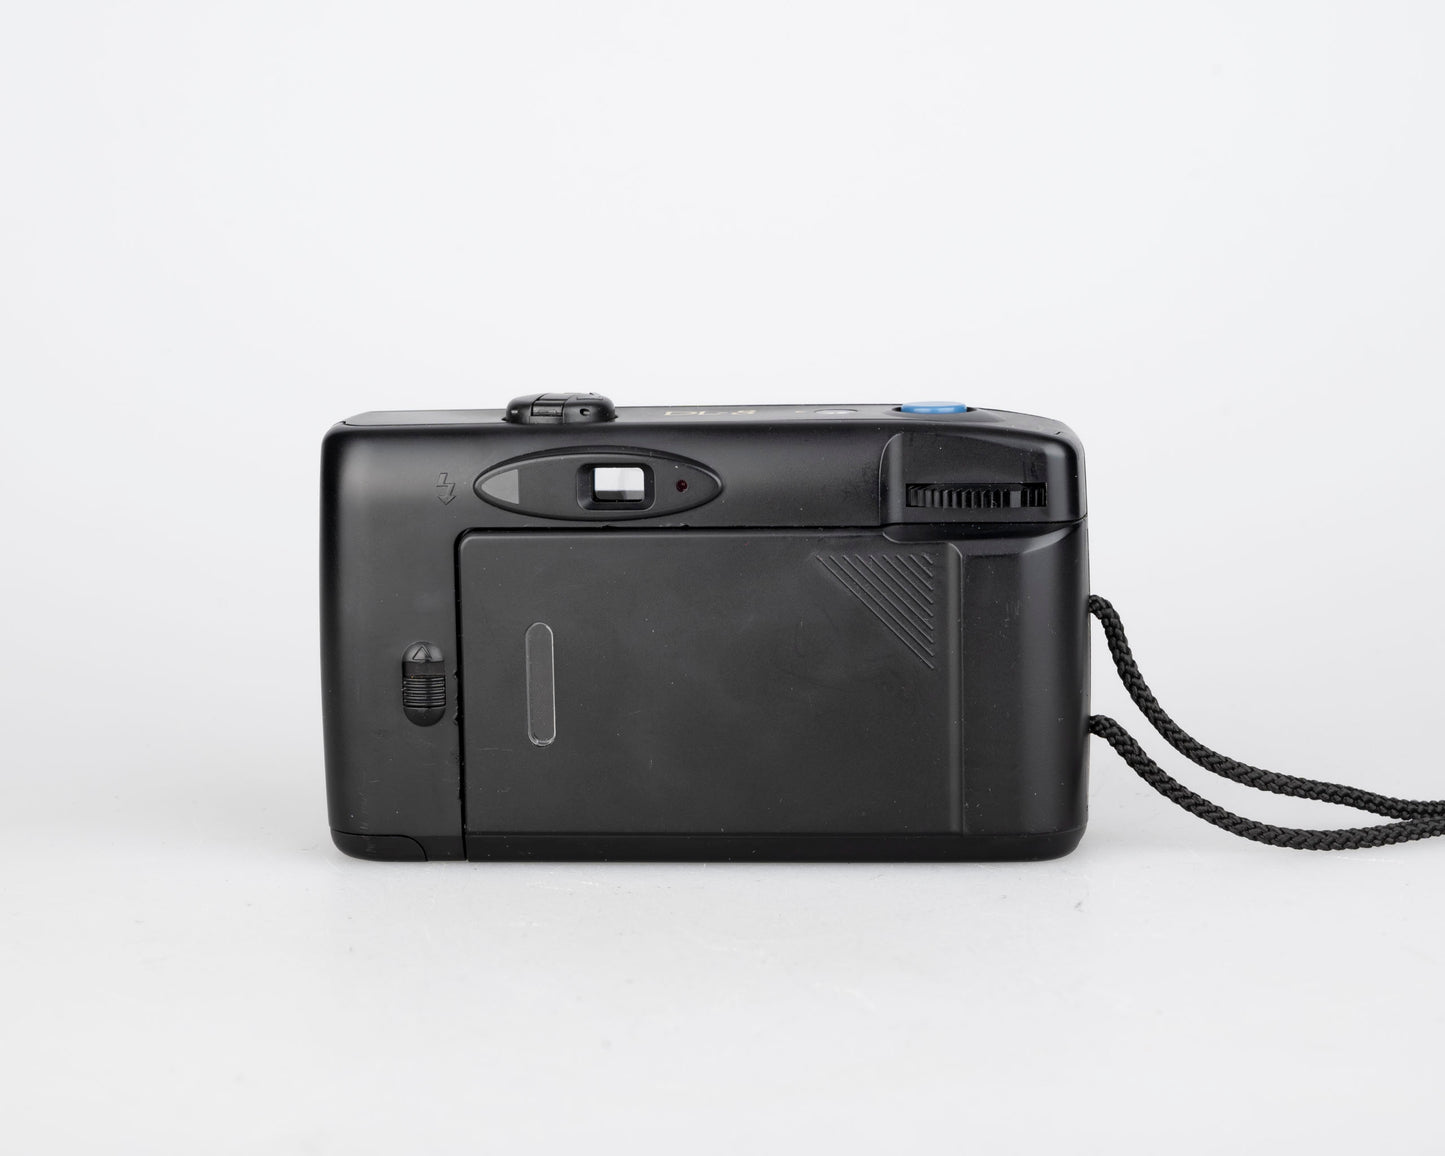 Fujifilm DL-8 35mm film camera (serial 90926754)